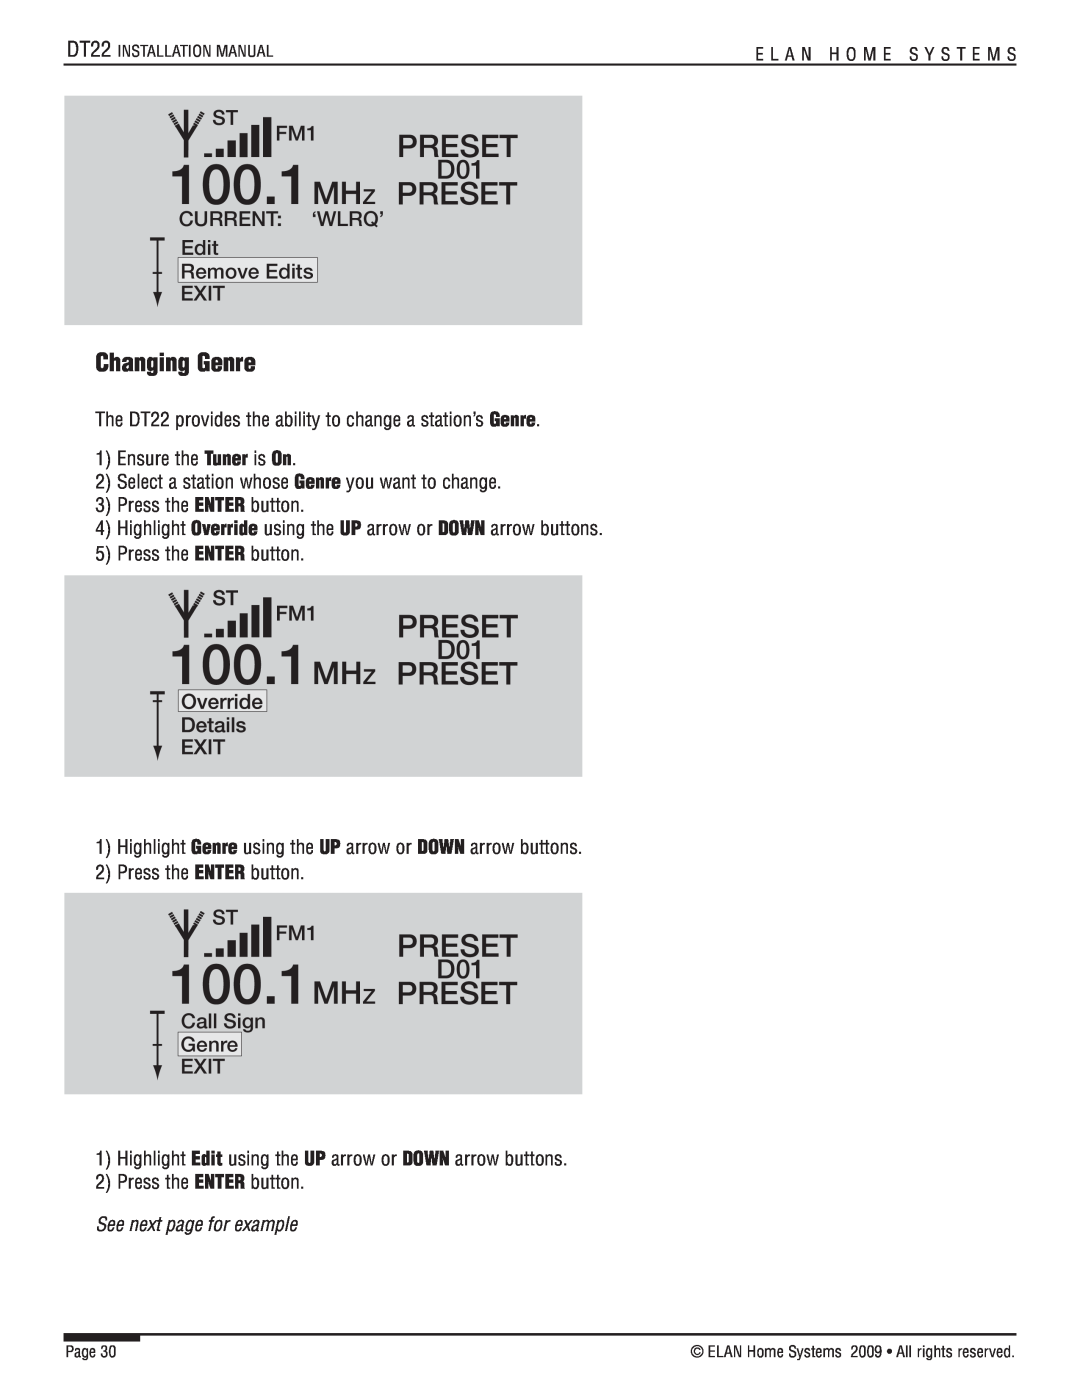 ELAN Home Systems DT22 manual Changing Genre, 100.1MHZ PRESET, Preset 